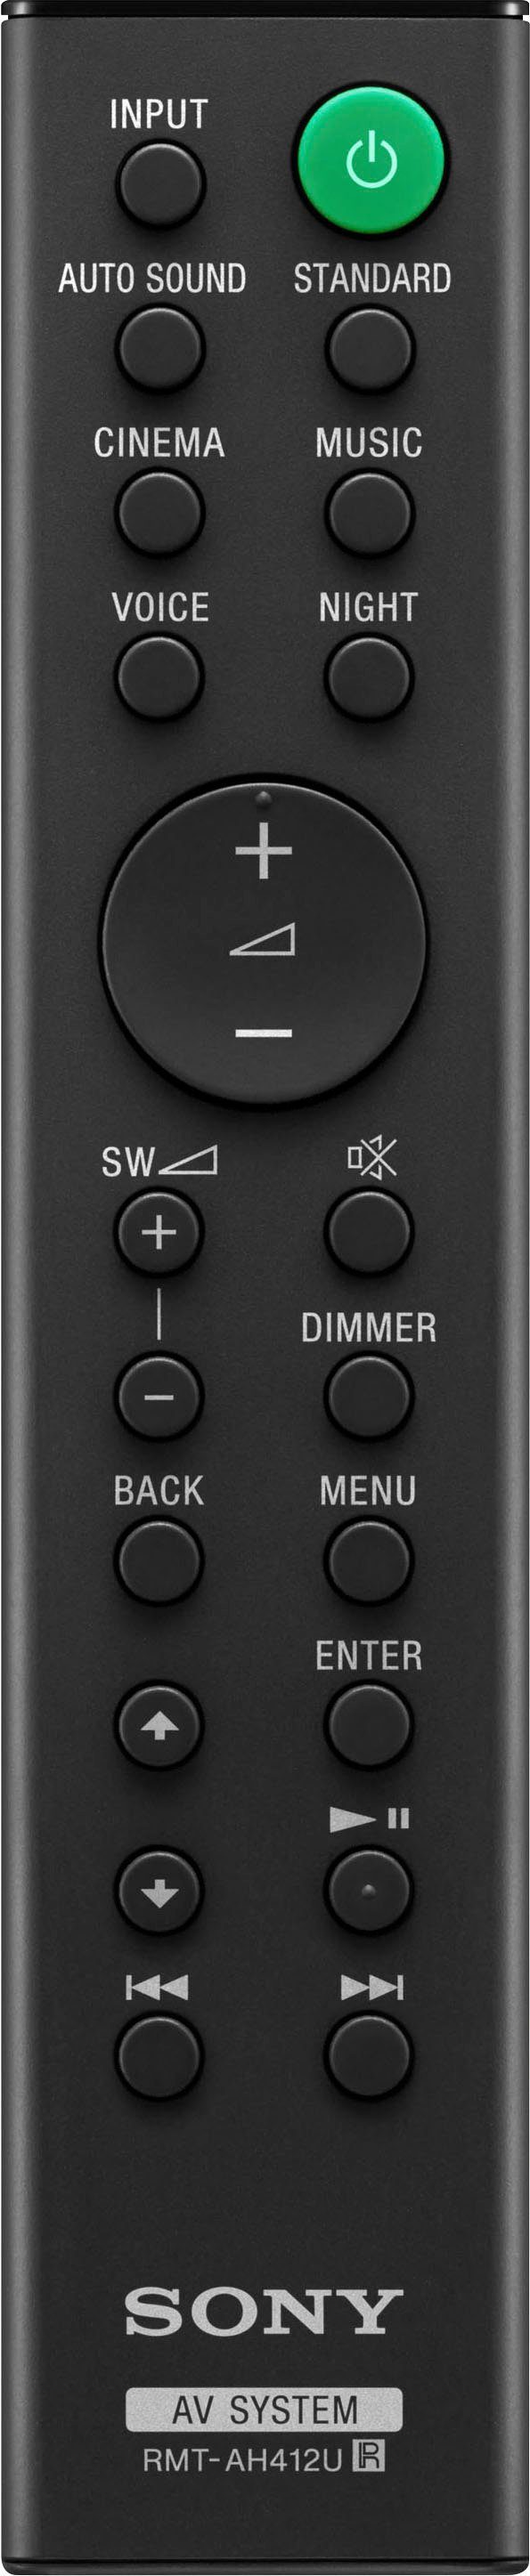 Sony HT-S20R Kanal TV 5.1 Sound, Dolby Digital) Surround W, 400 Soundbar Subwoofer, (Bluetooth